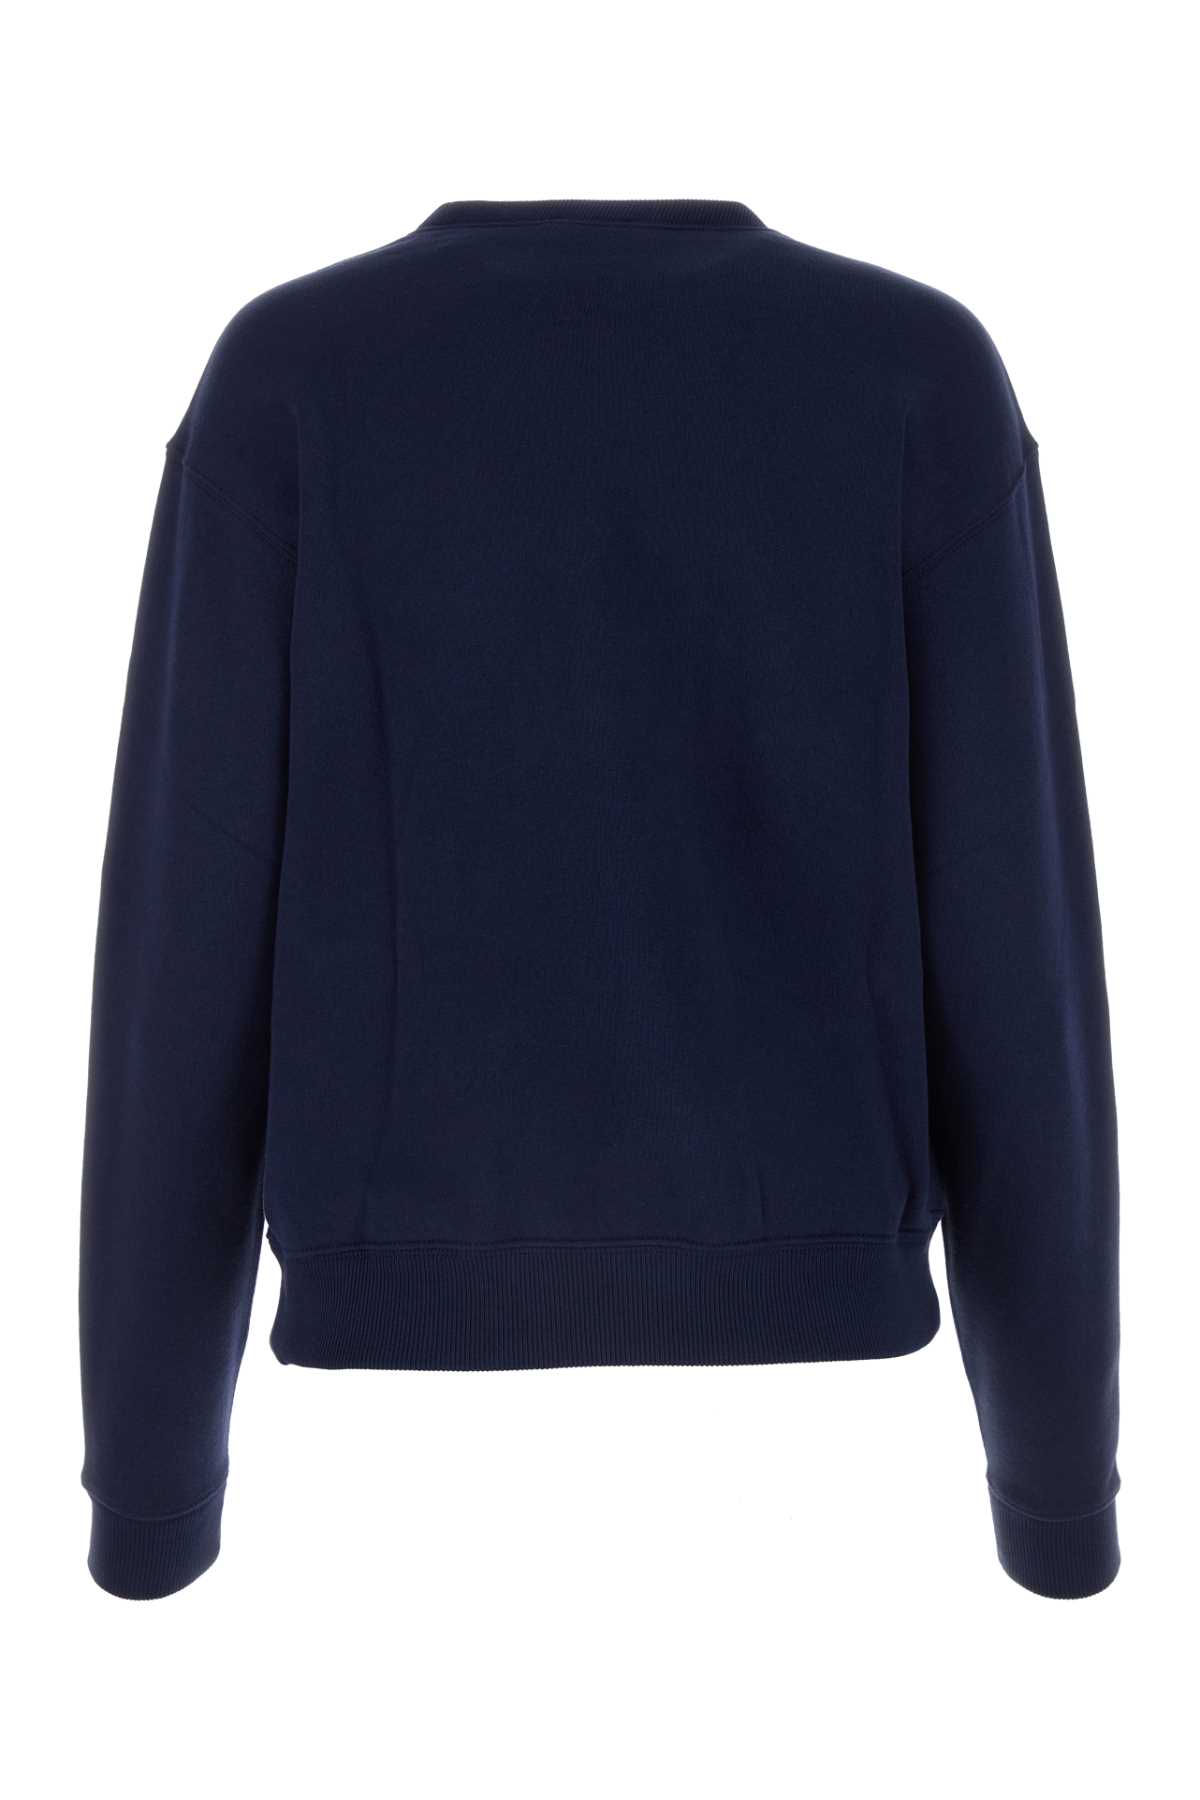 Polo Ralph Lauren Navy Blue Cotton Blend Sweatshirt In Cruisenavy